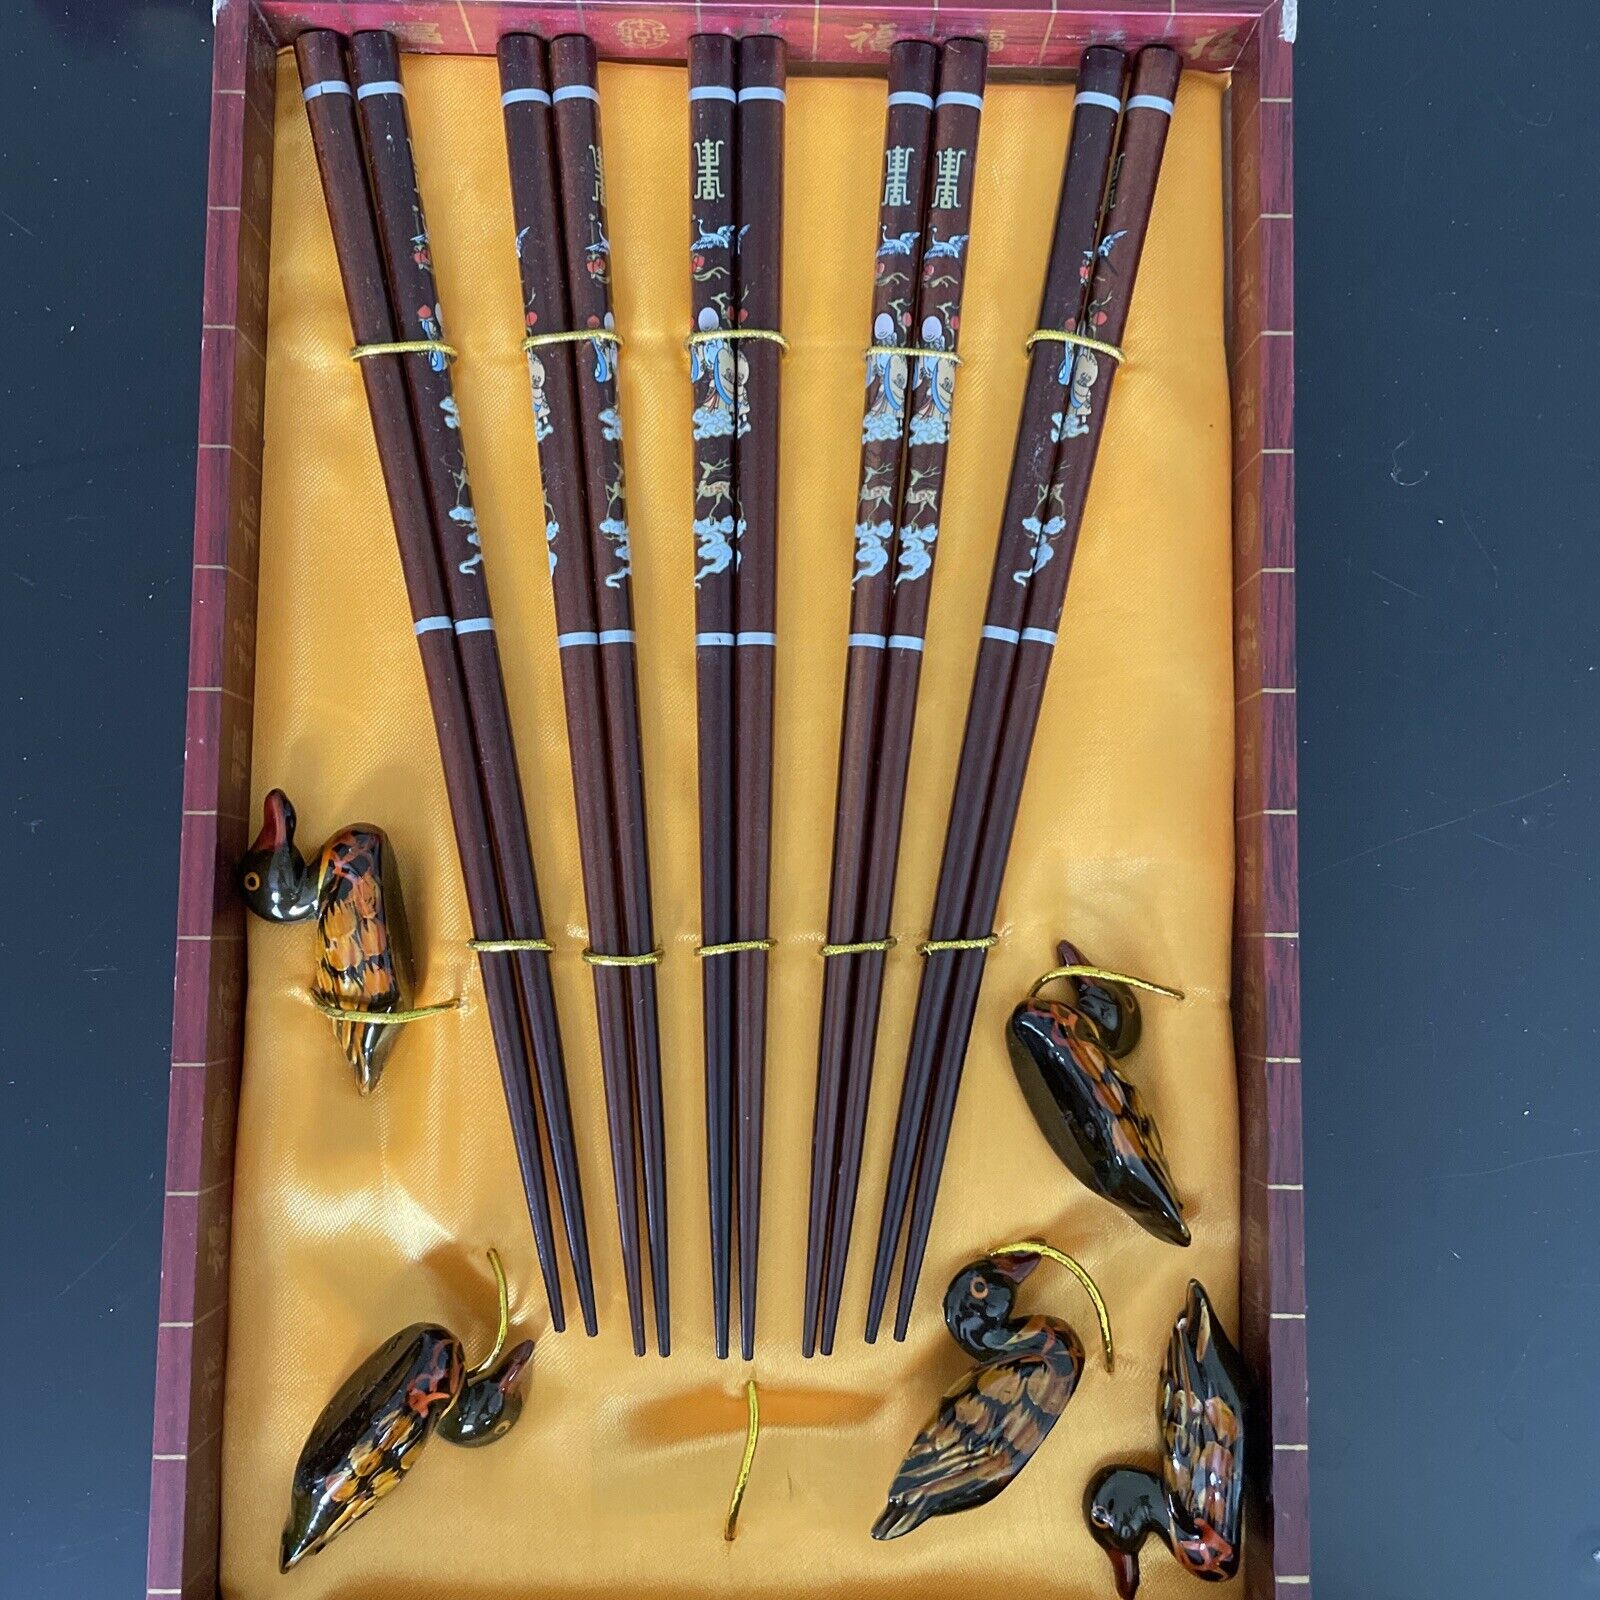 VTG Wooden Chopsticks & DUCK Chopstick Rest Holders in Box Set of 5